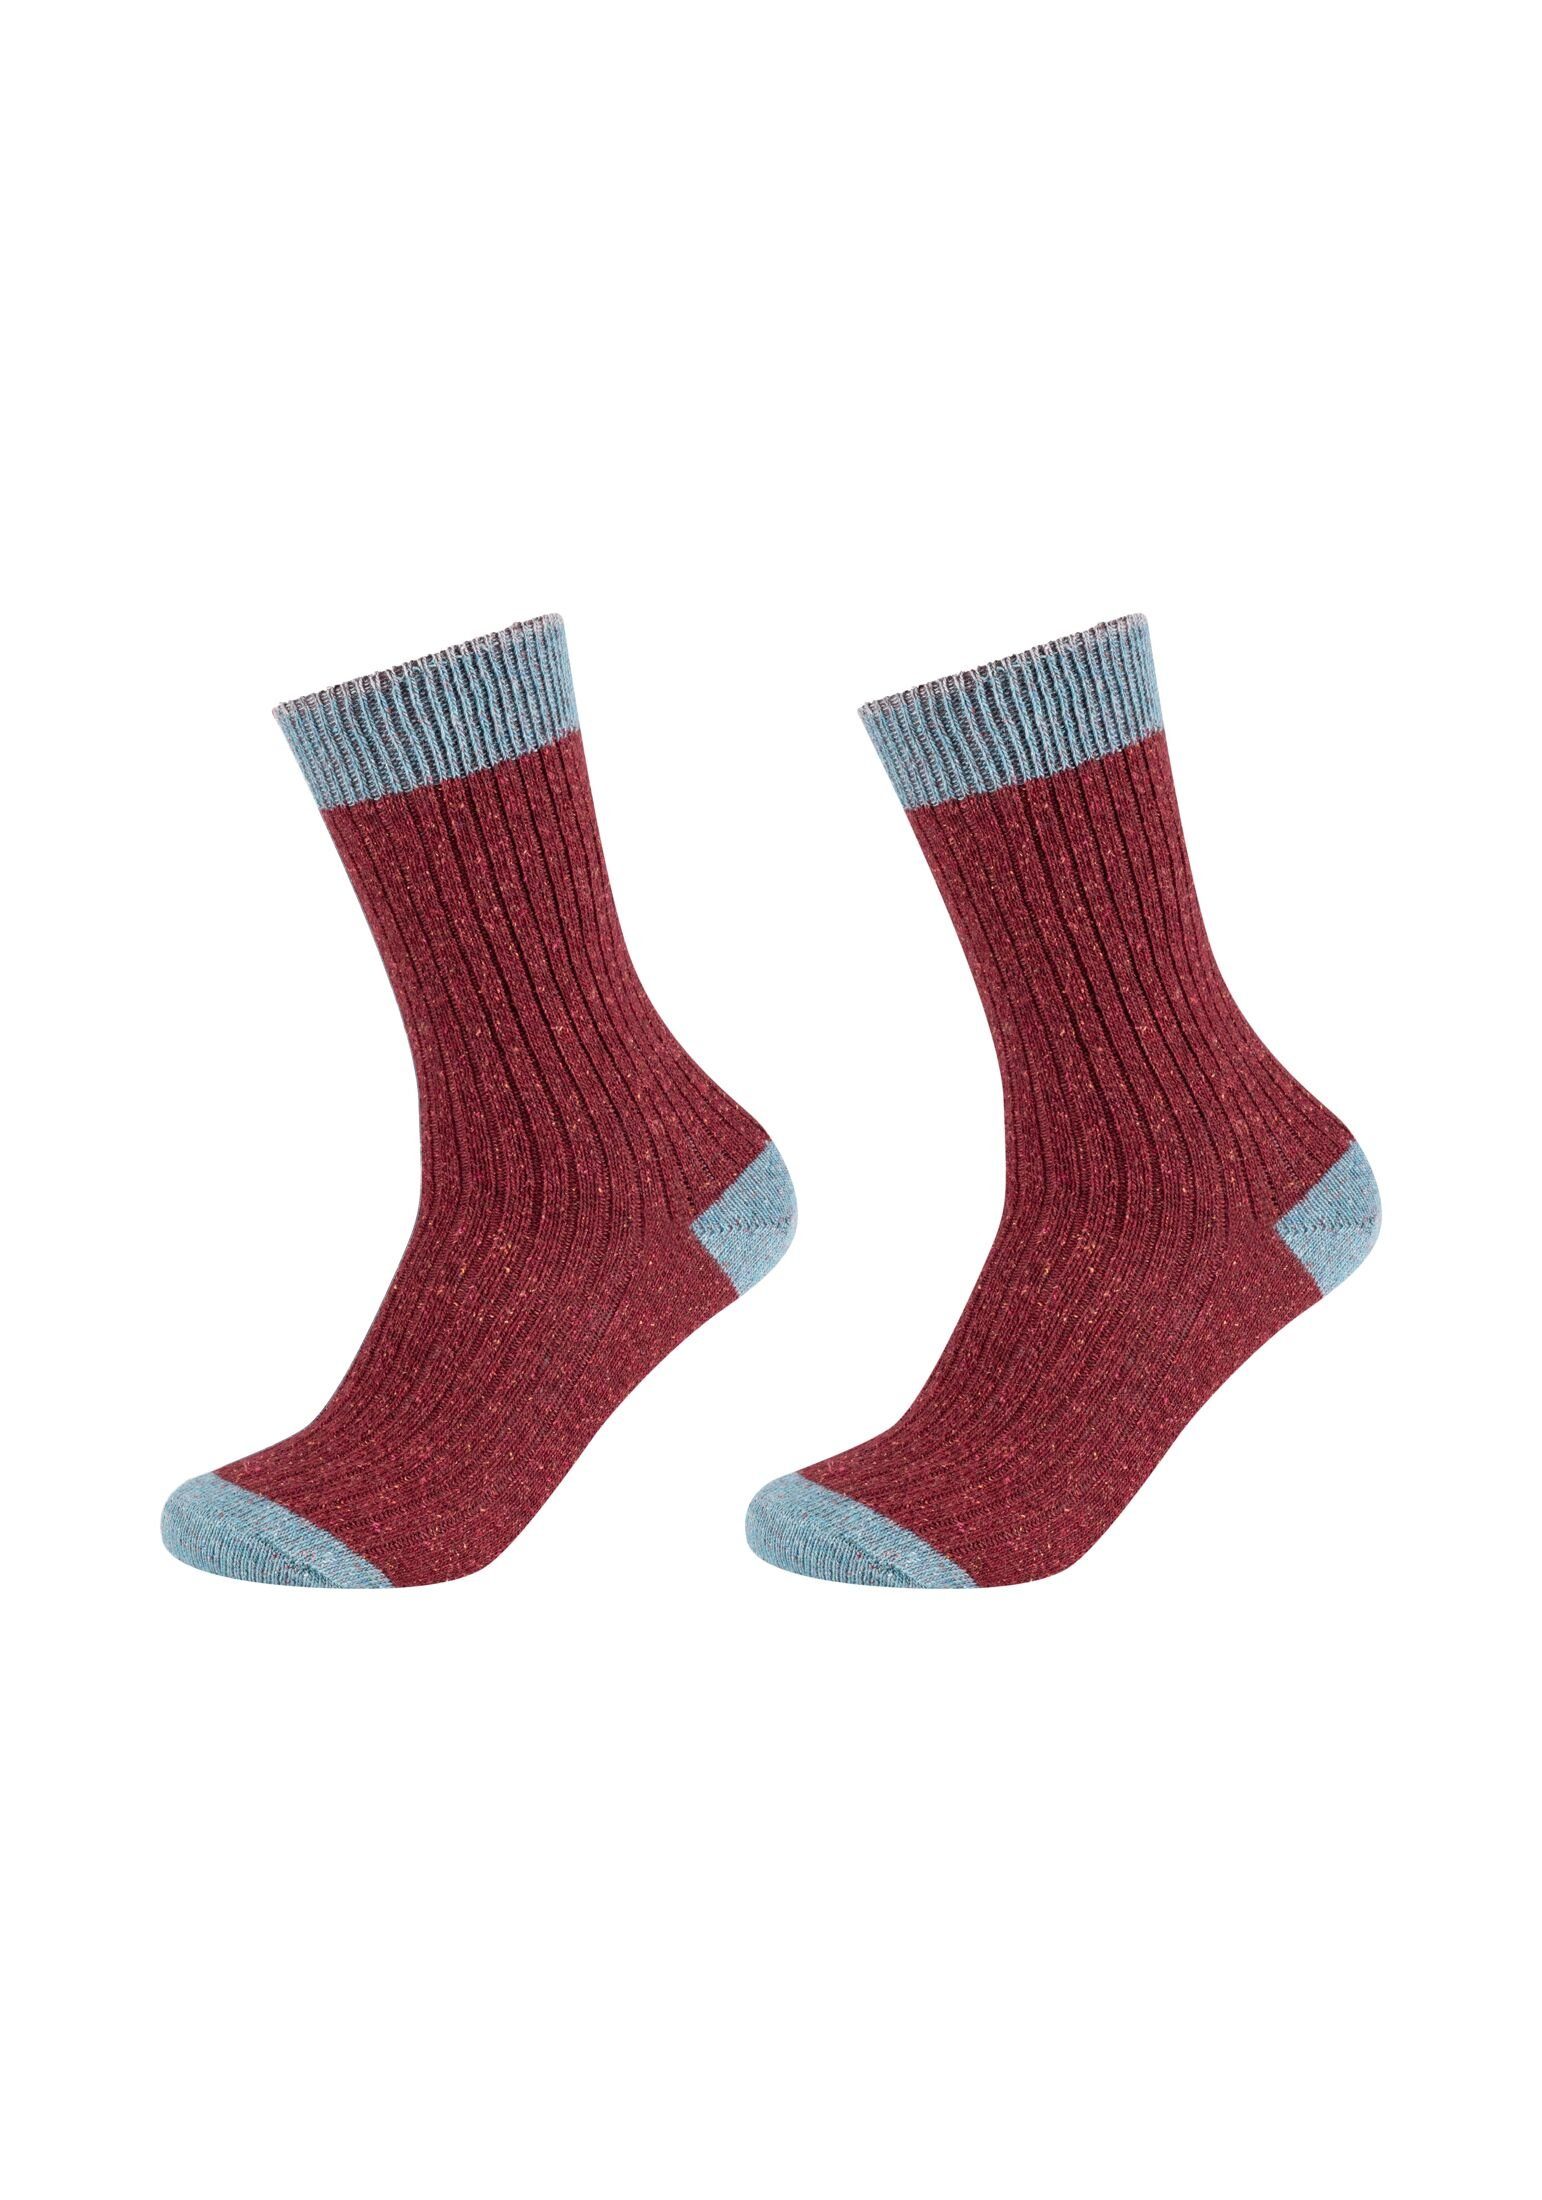  Socken Socken 2er Pack, Tolle Socken 2er-Pack mit Kontrastfarben  von